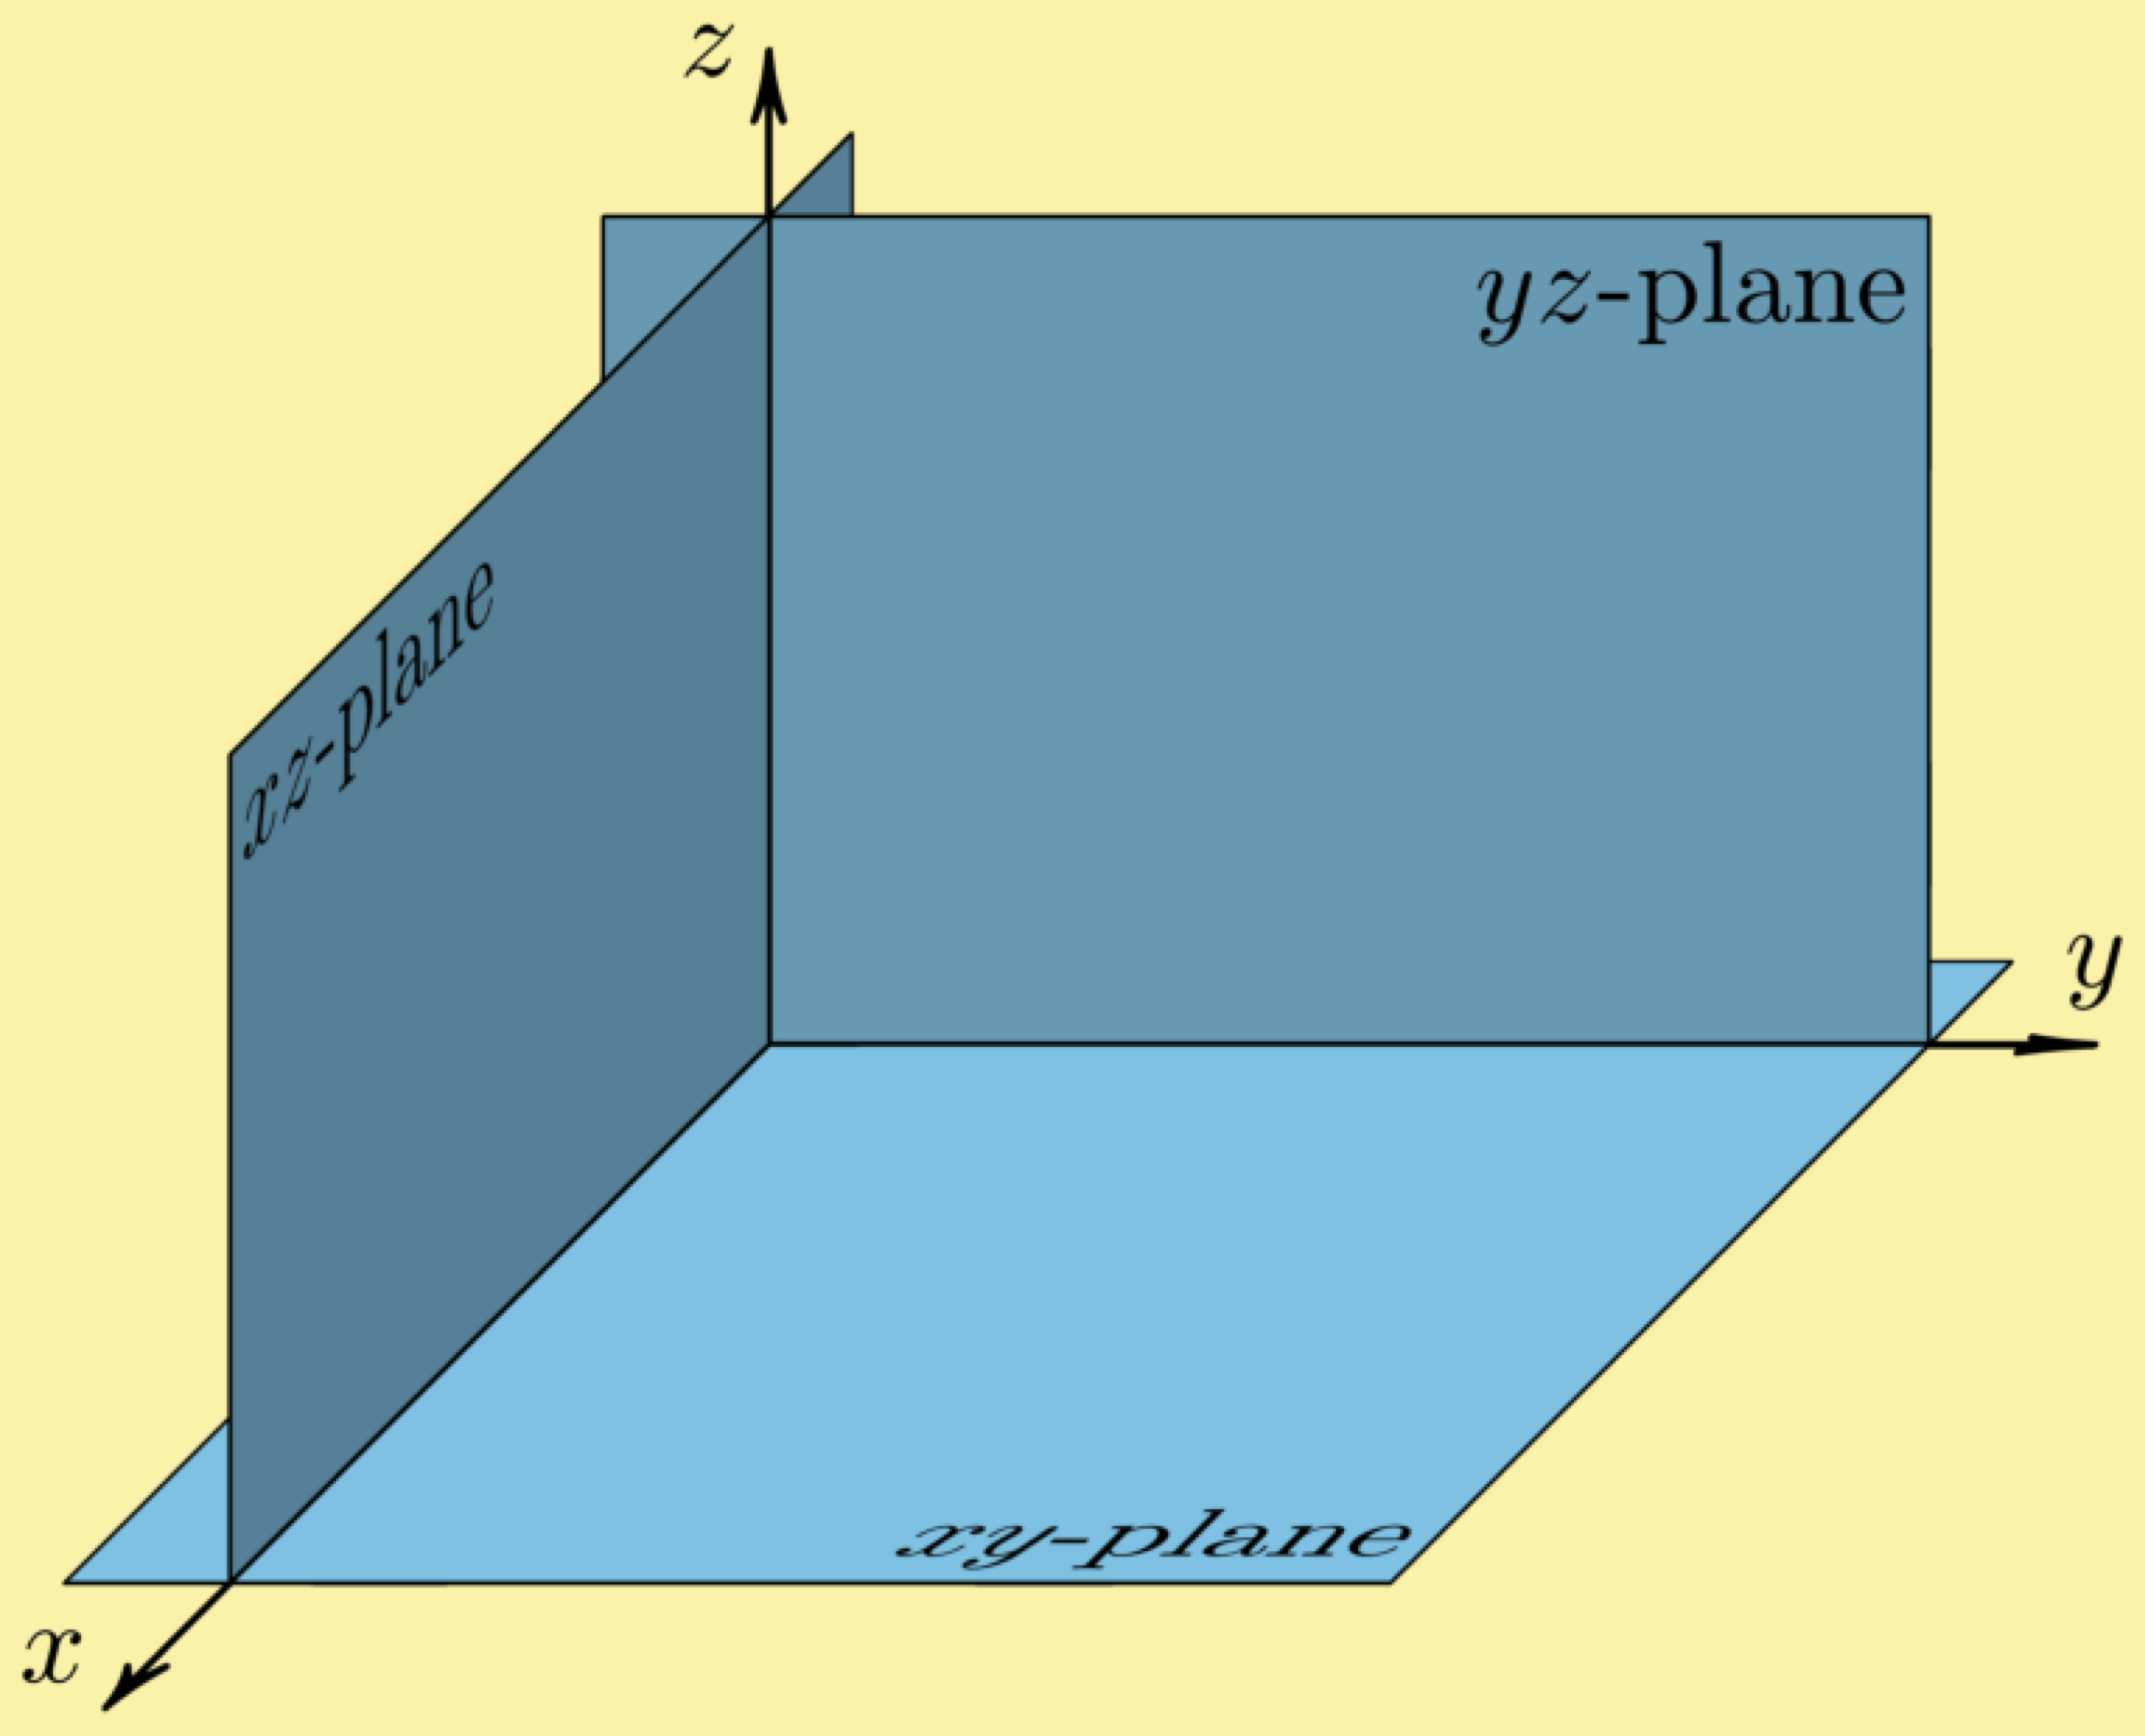 coordinate planes xy-plane yz-plane xz-plane 3-space coordinate system xyz R3 Cartesian three-space